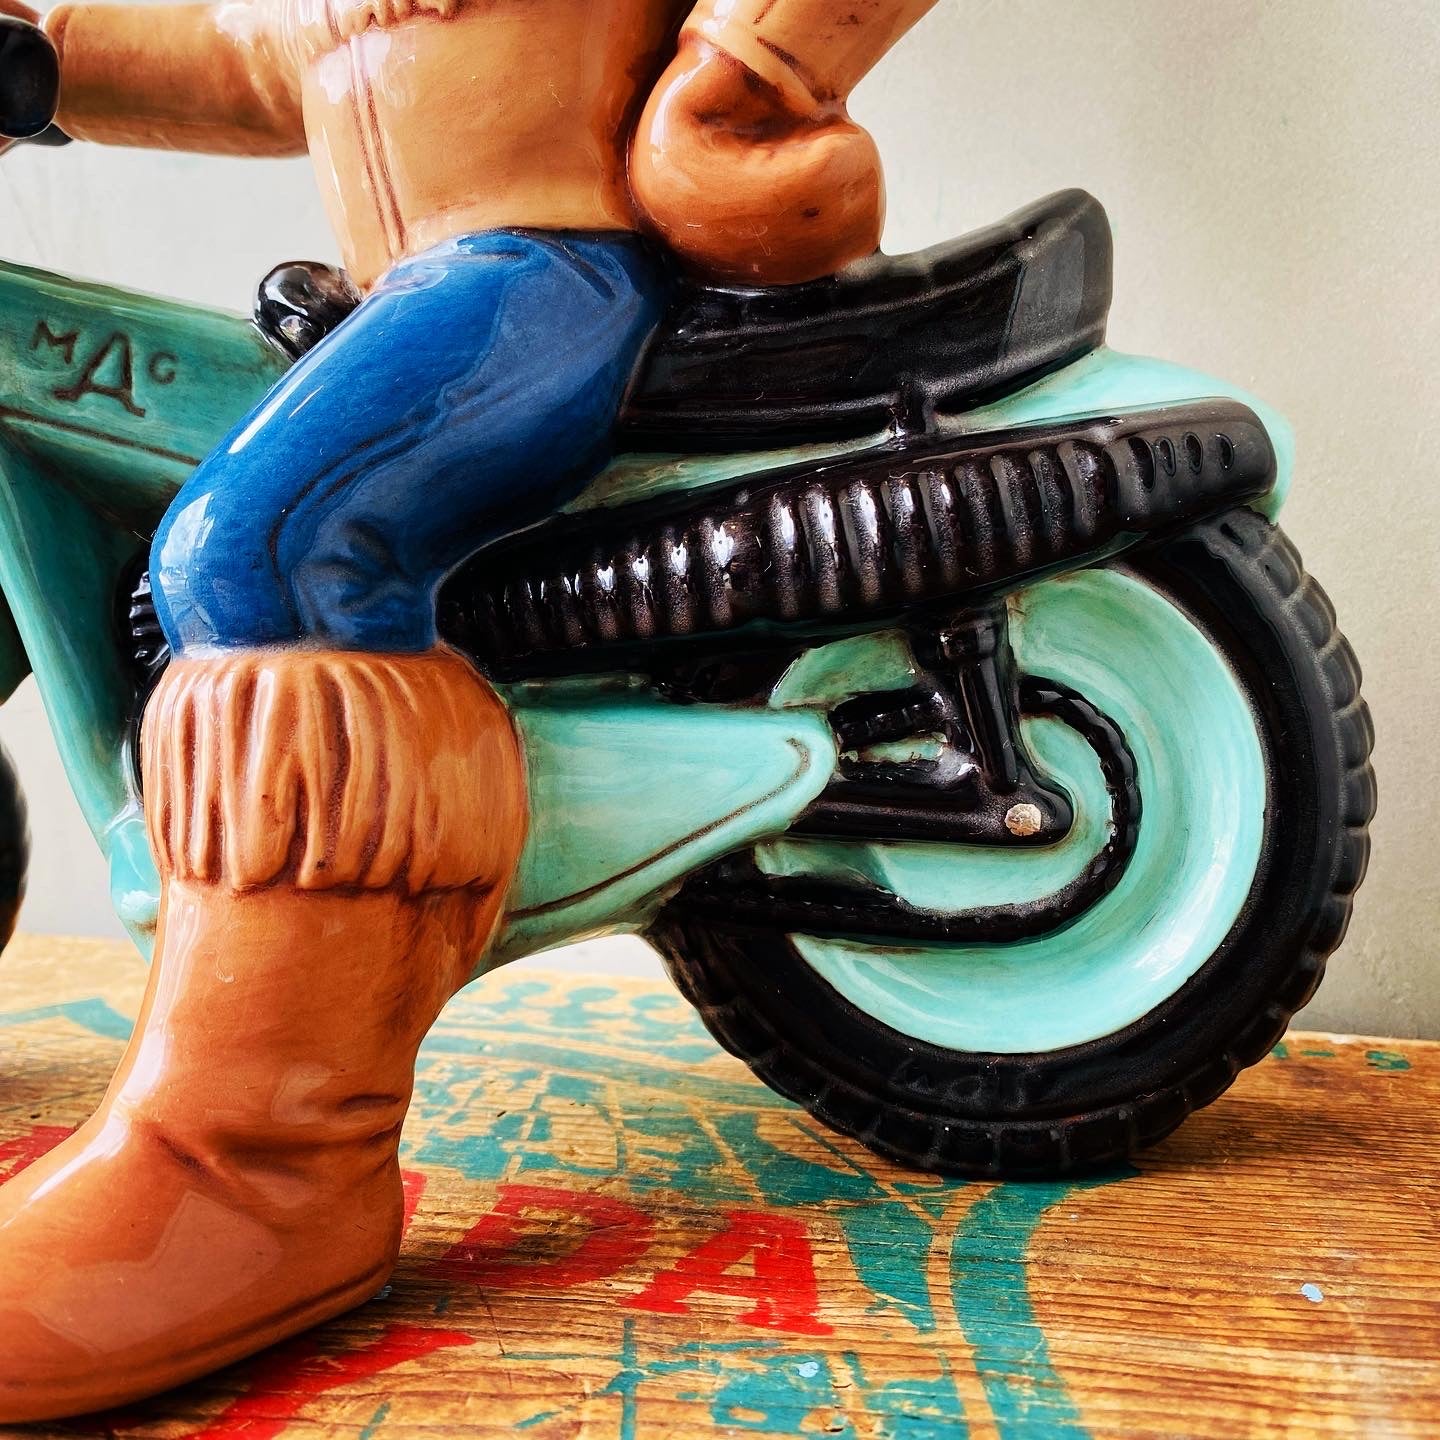 【1982 USA vintage】Atlantic mold ceramic boy ビンテージドール バイク